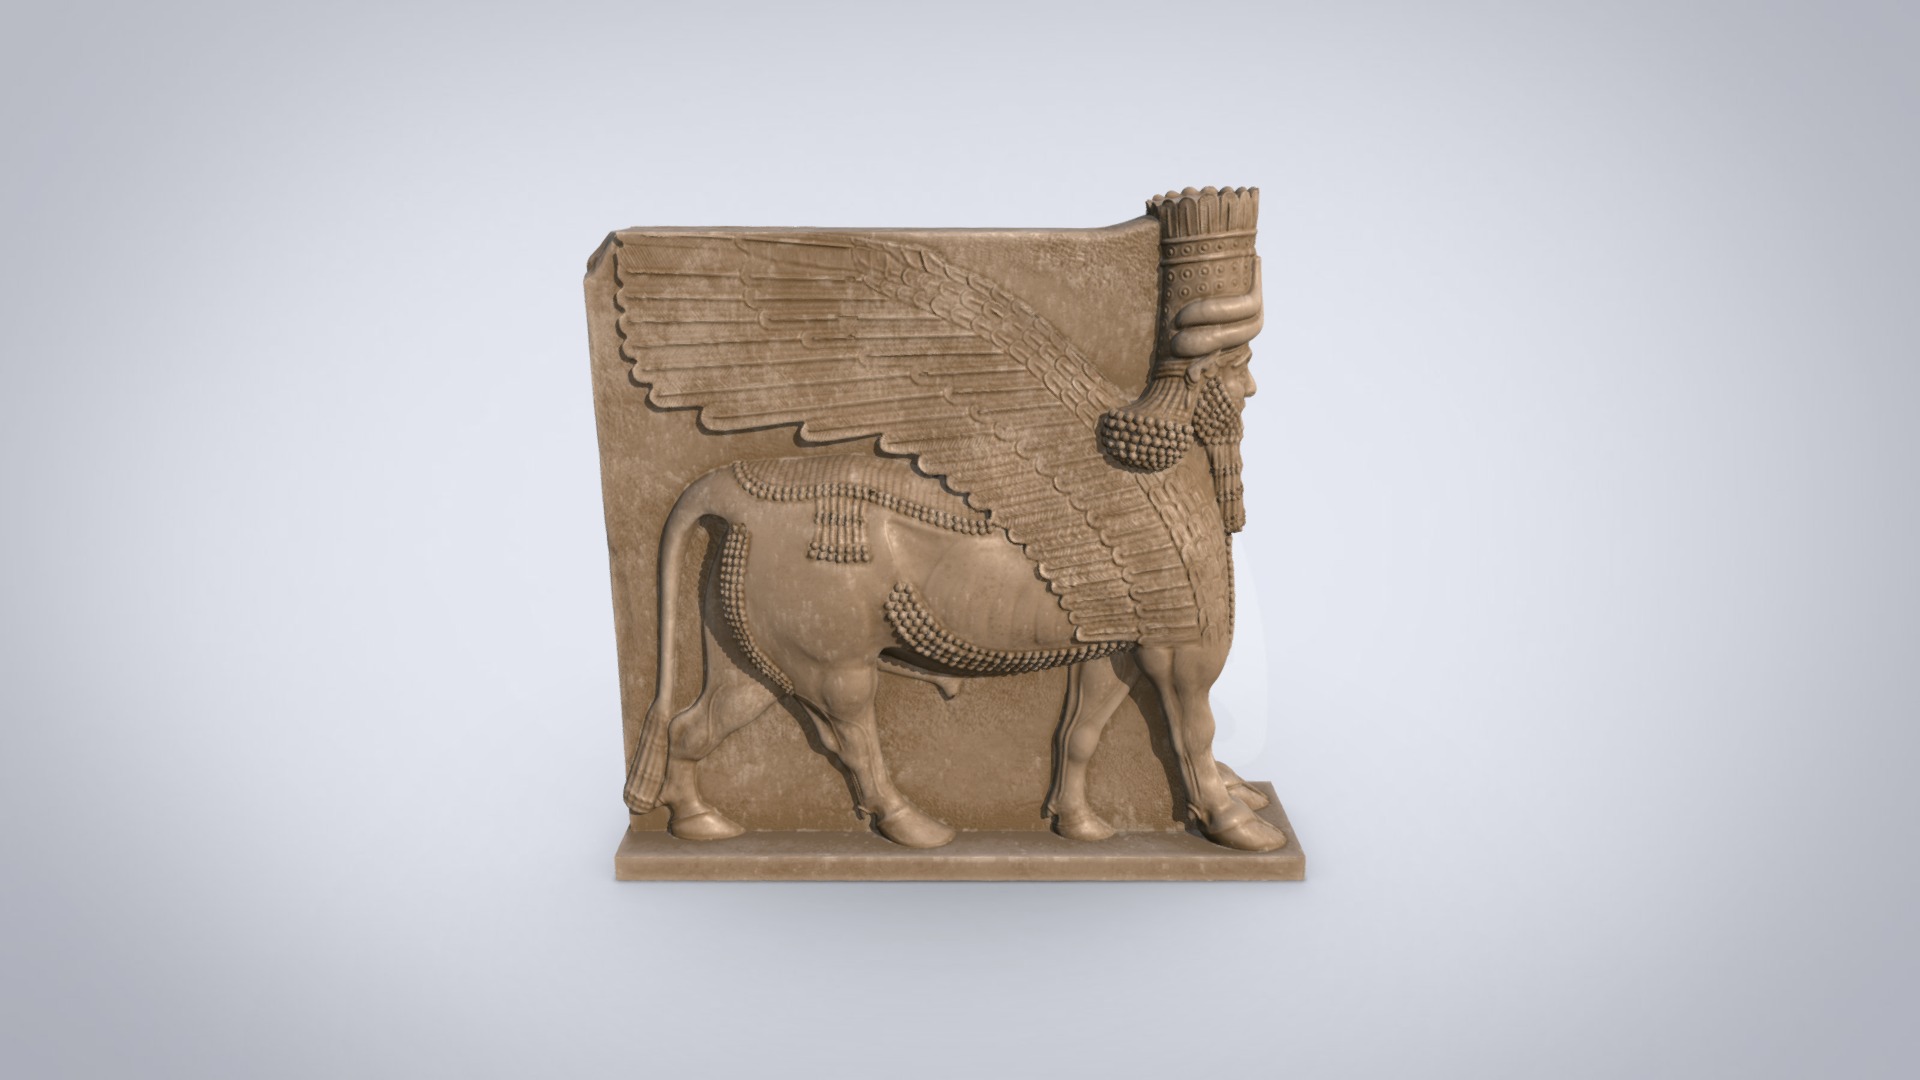 3D model Lammasu - This is a 3D model of the Lammasu. The 3D model is about a stone sculpture of an elephant.